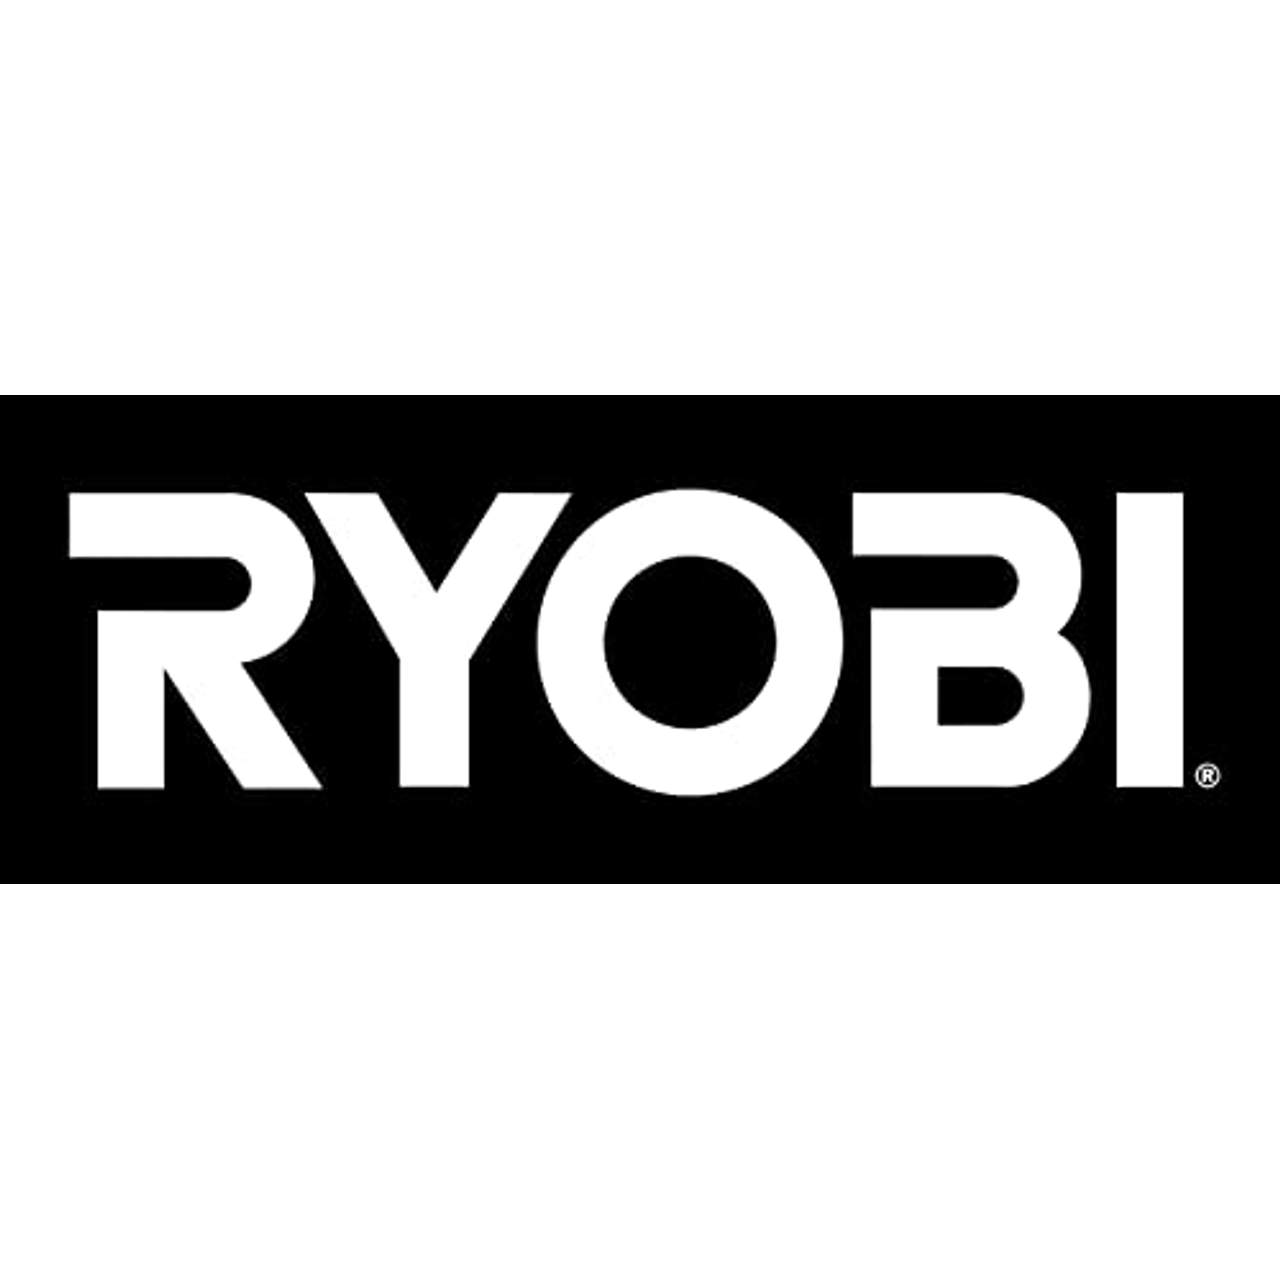 Ryobi RY18PCB-0 ONE+ Patio Cleaner with Scrubbing Brush